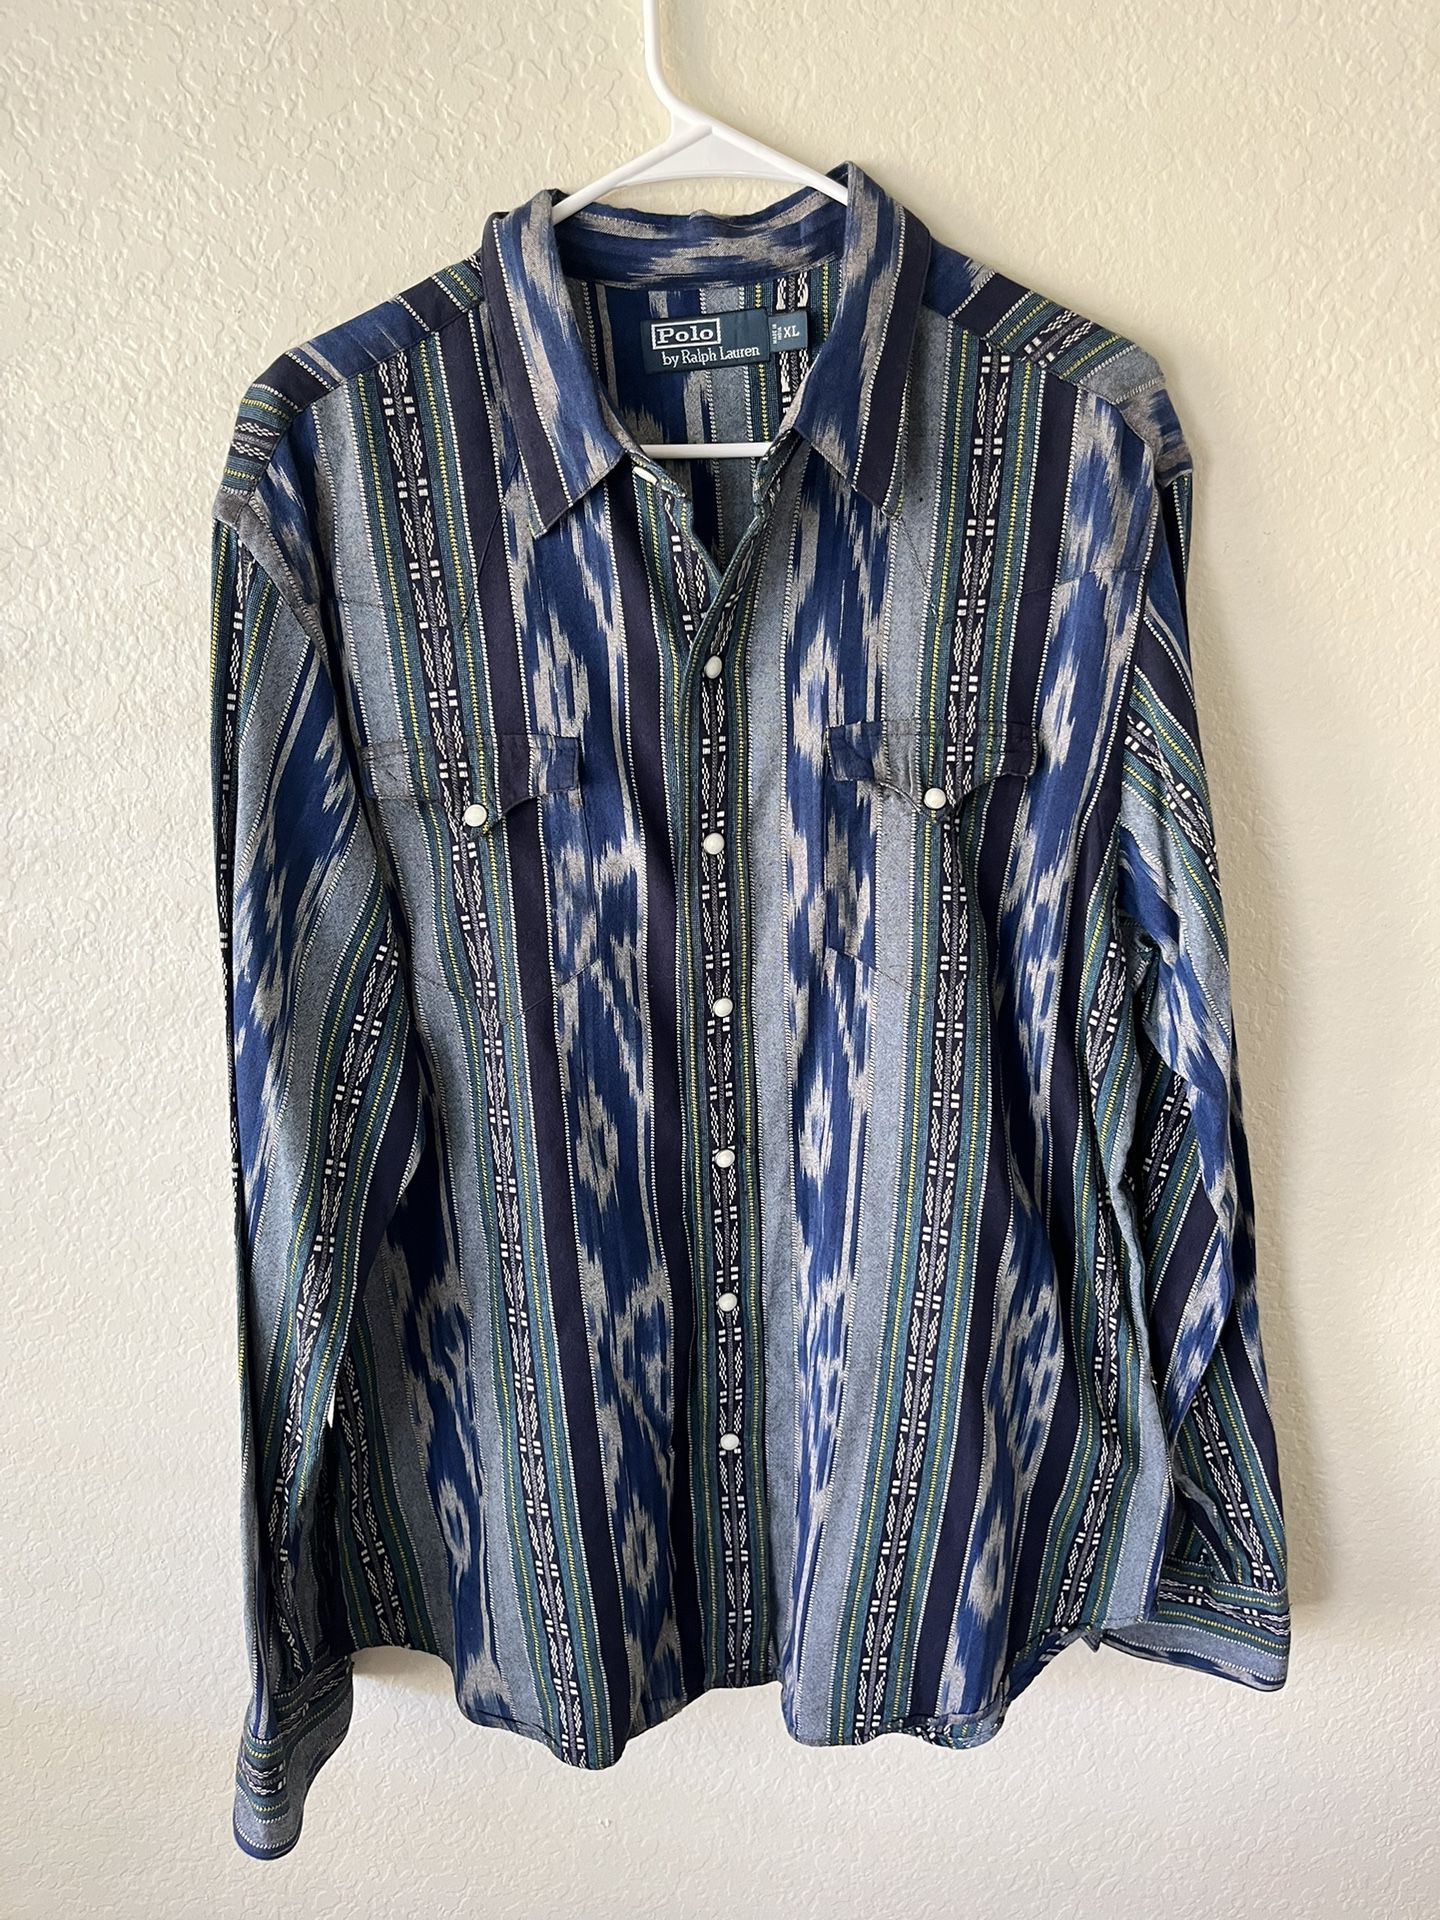 Ralph Lauren Polo Native Southwestern Cowboy Aztec Pearl Snap Shirt Men’s XL